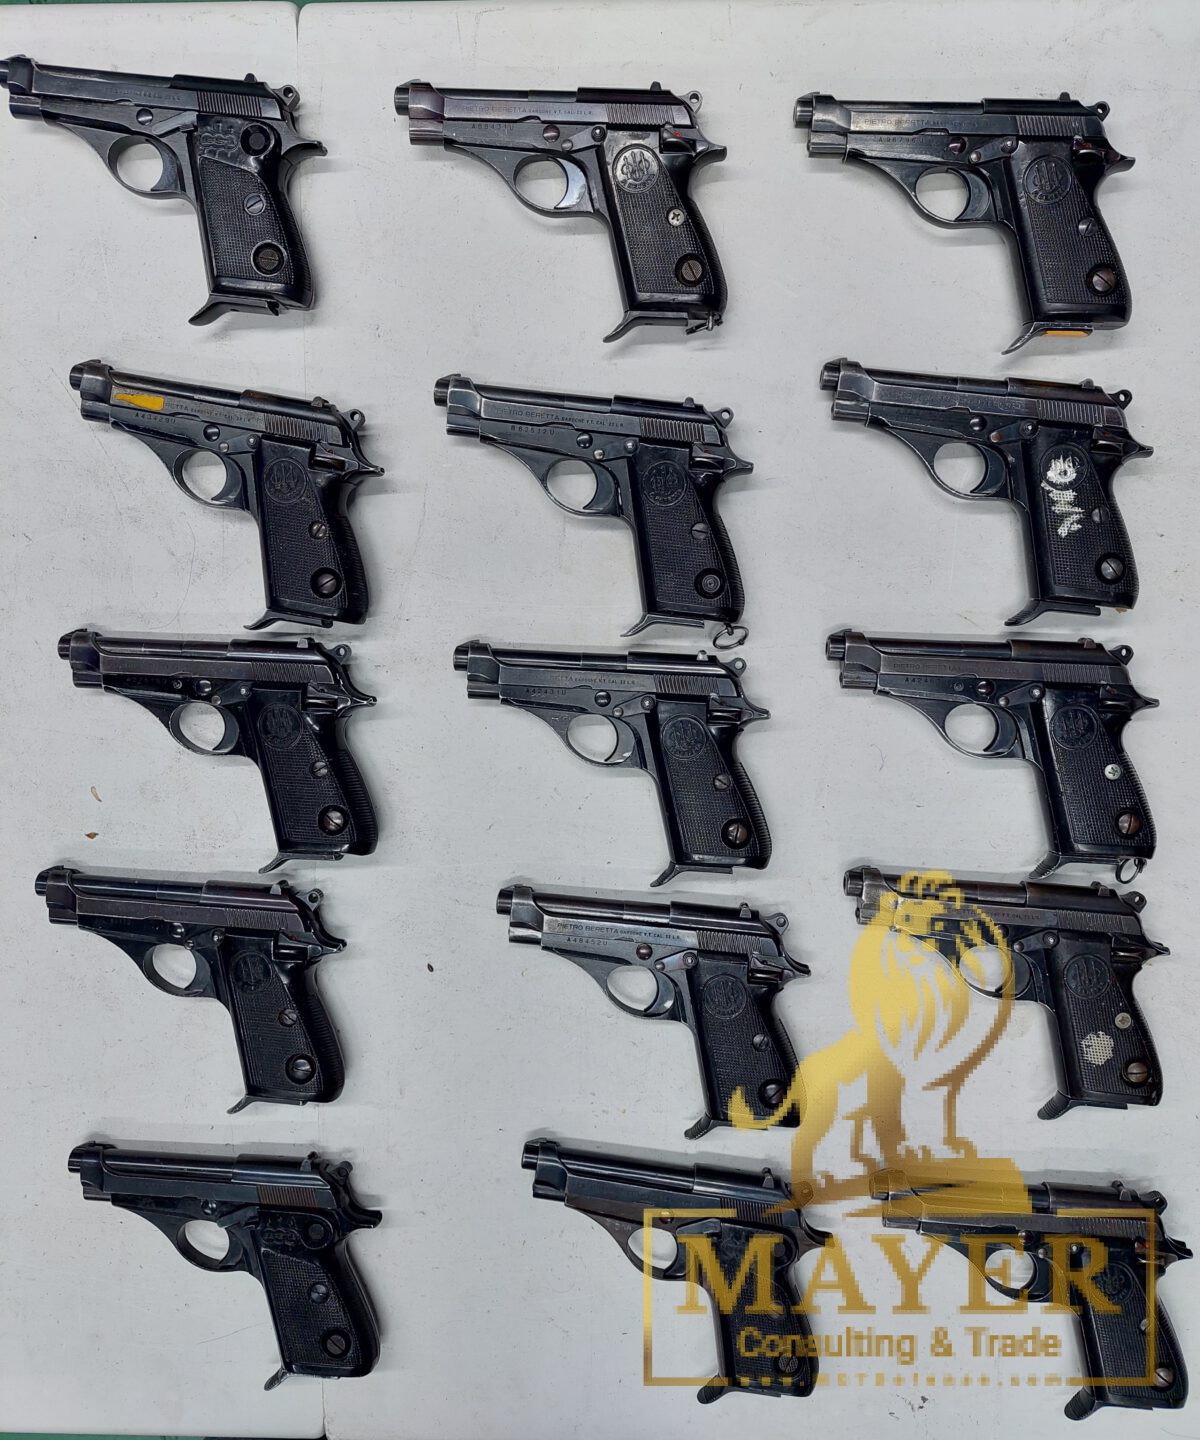 Israeli Beretta 71 0.22lr pistols